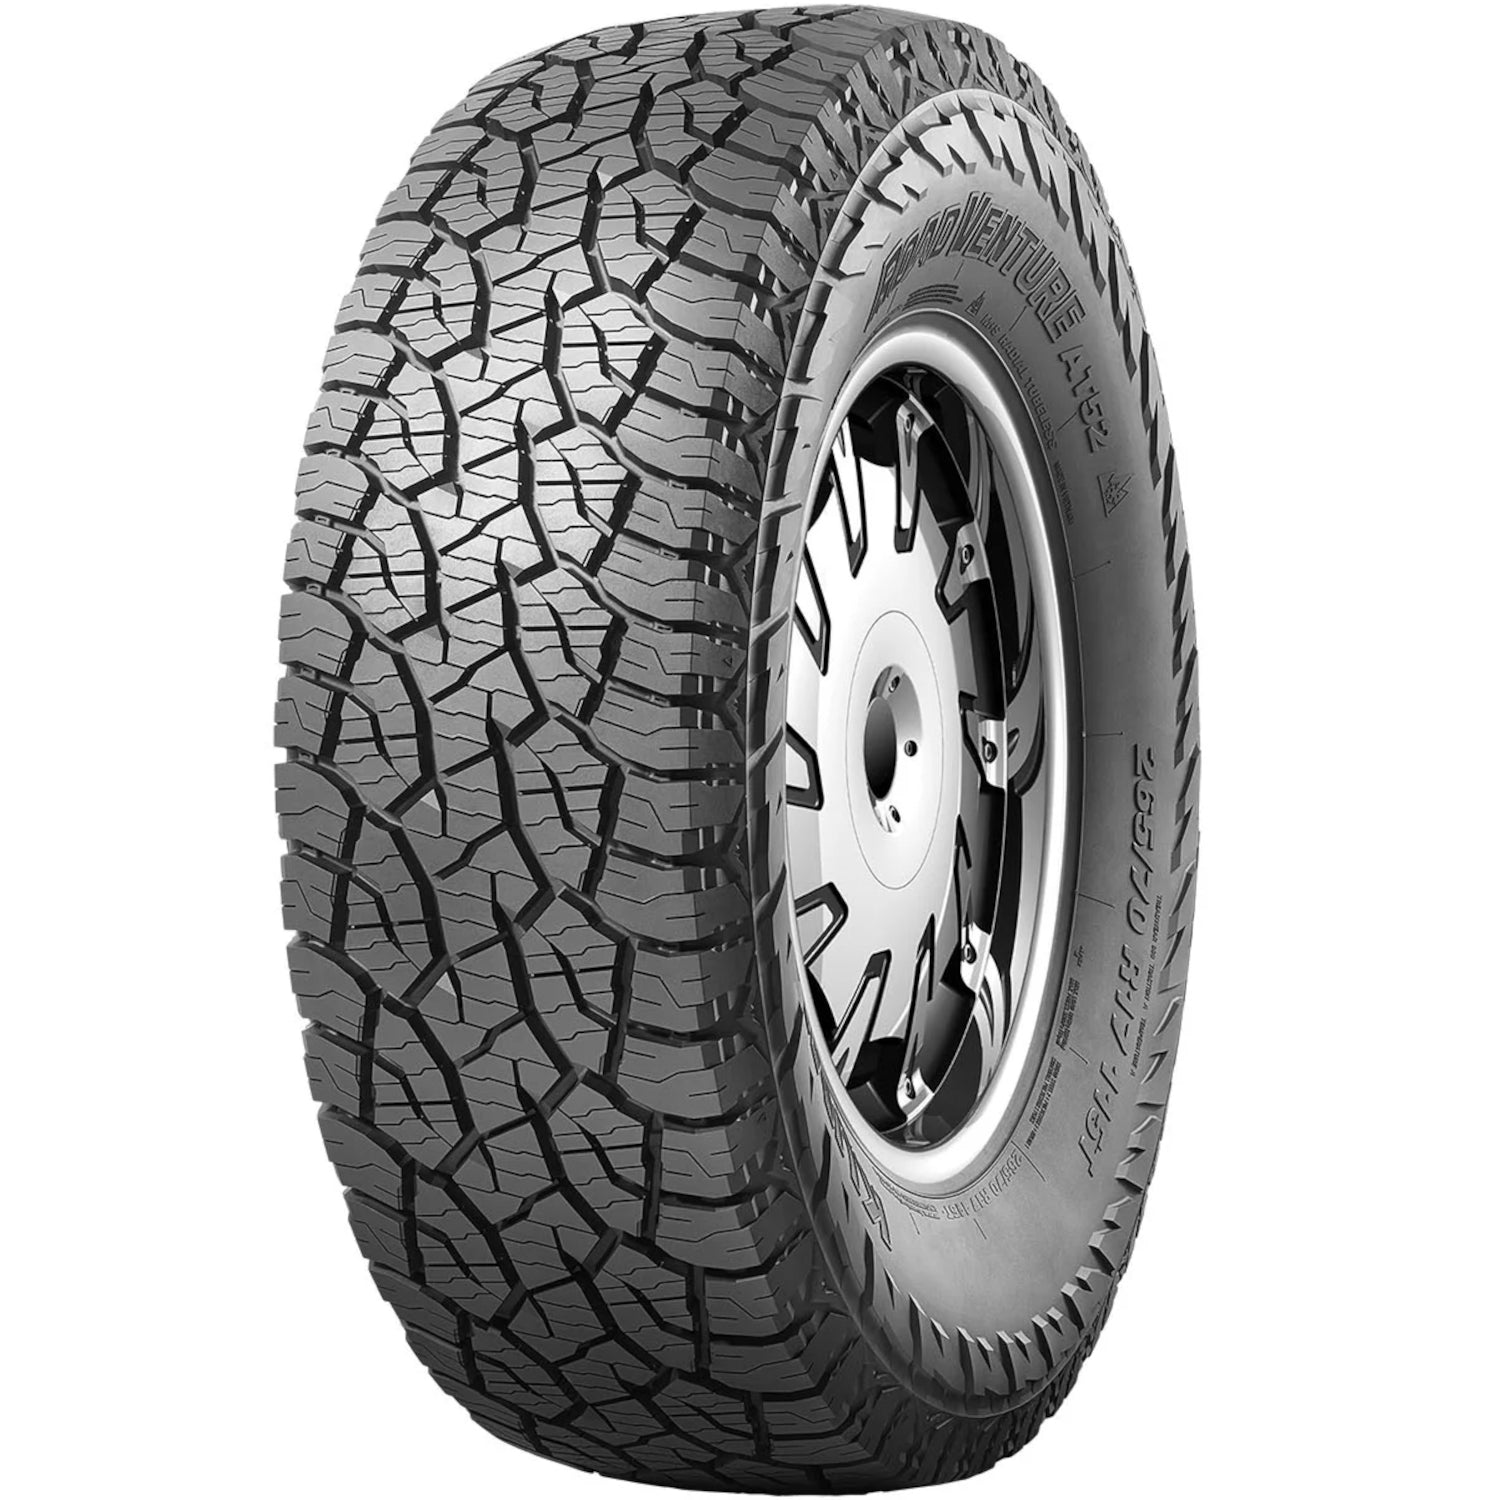 KUMHO ROAD VENTURE AT52 255/70R17 (31.1X10R 17) Tires